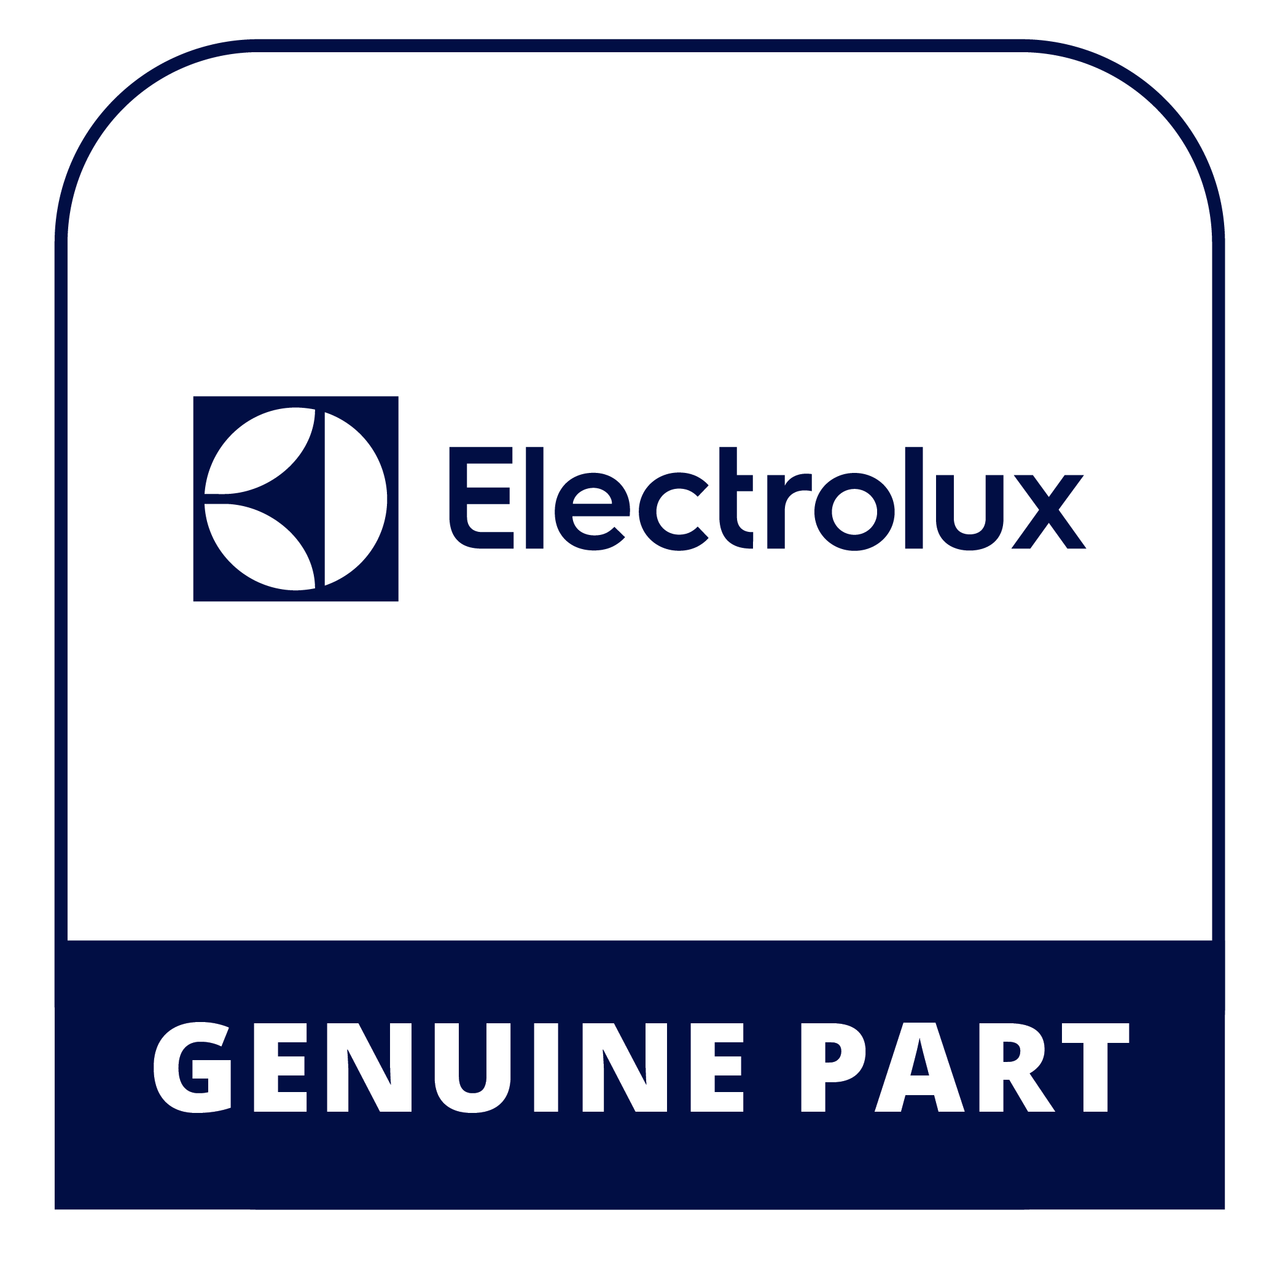 Frigidaire - Electrolux 318221300 Ignitor/Orifice Ass - Genuine Electrolux Part